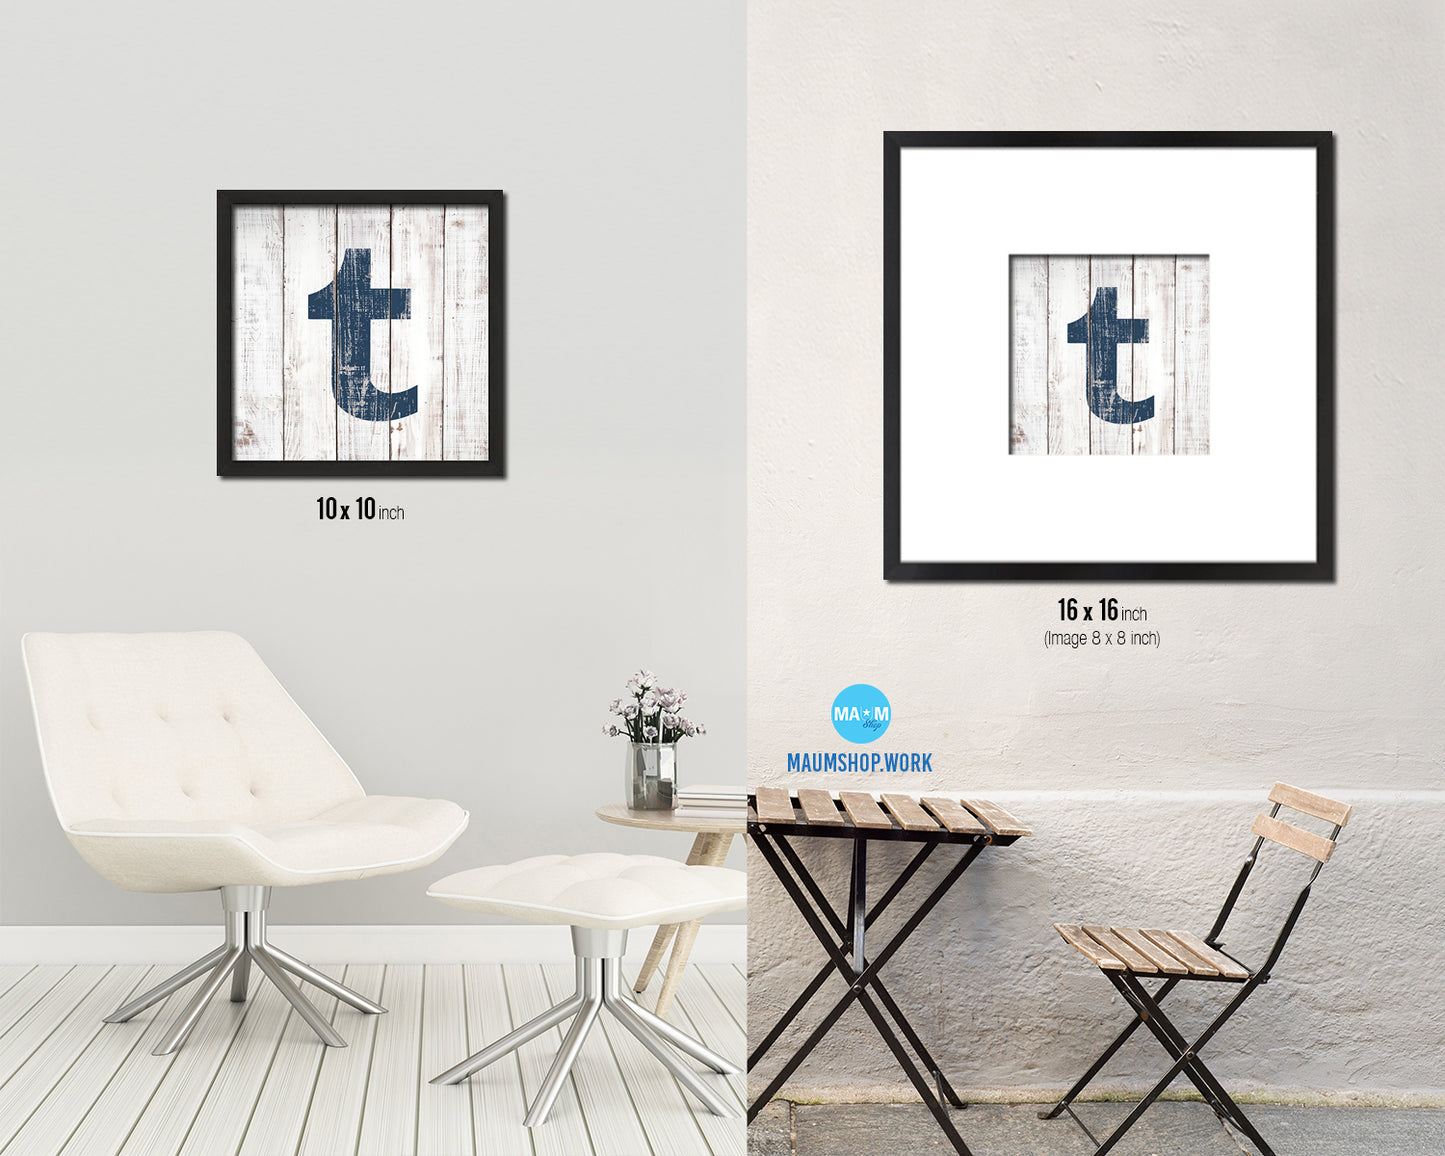 Tumblr Social Media Symbol Icons logo Framed Print Shabby Chic Home Decor Wall Art Gifts